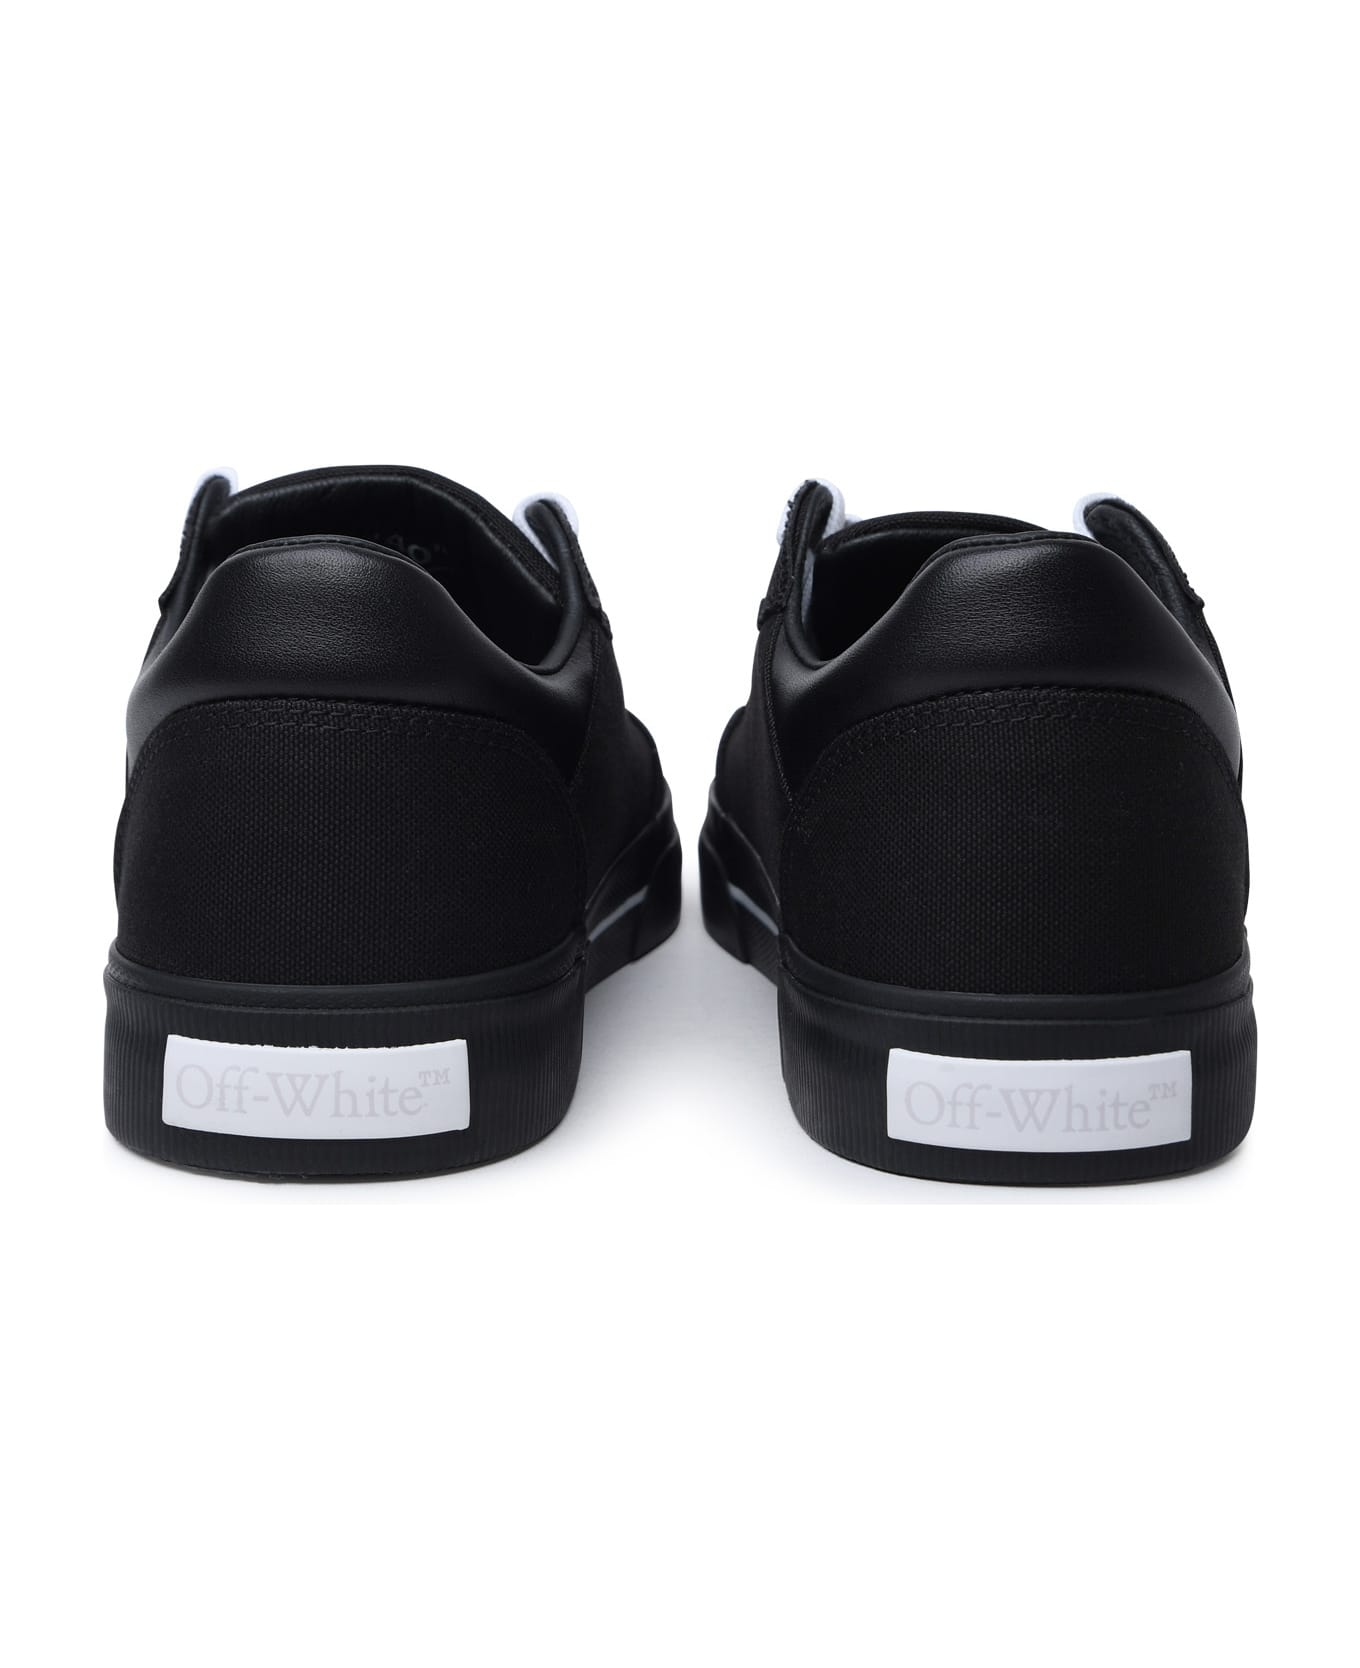 Off-White 'new Vulcanized' Black Fabric Sneakers - Black